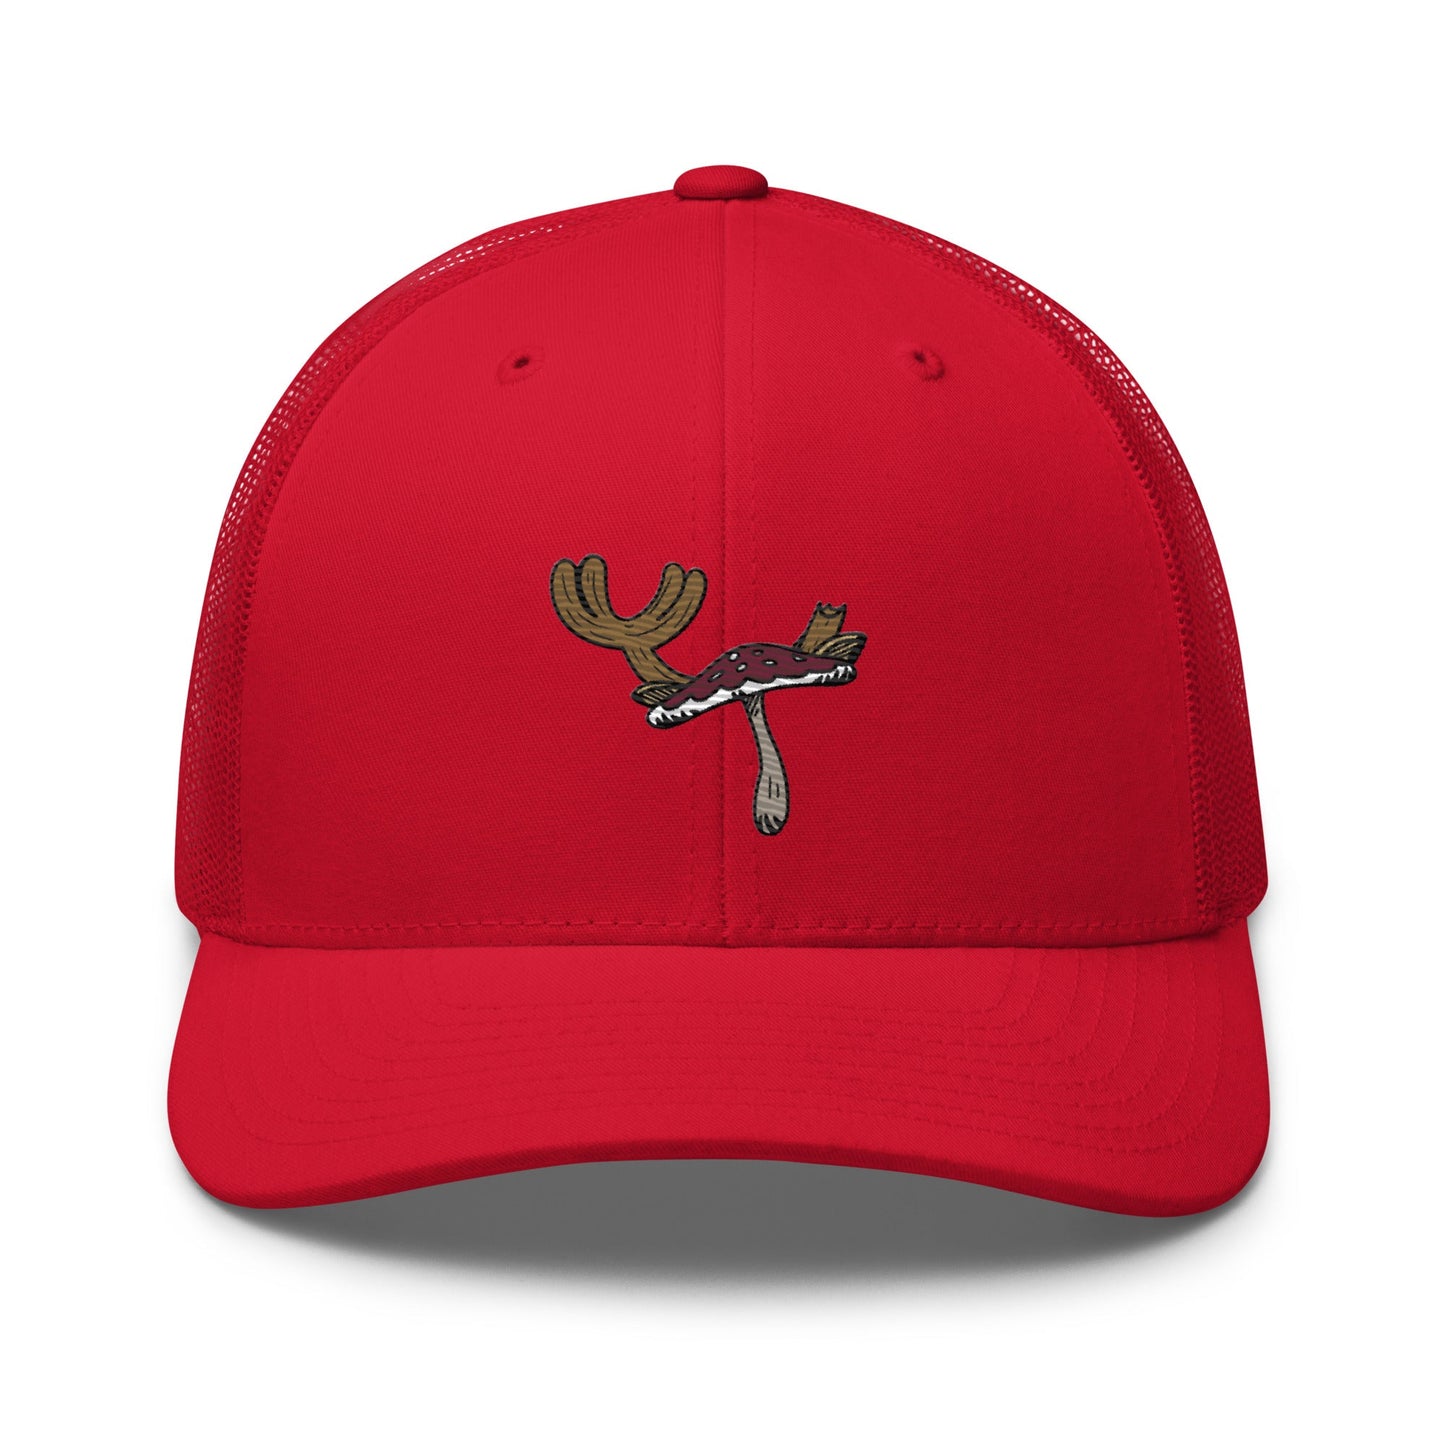 Chopper Mushroom Embroidered Unisex Trucker Hat